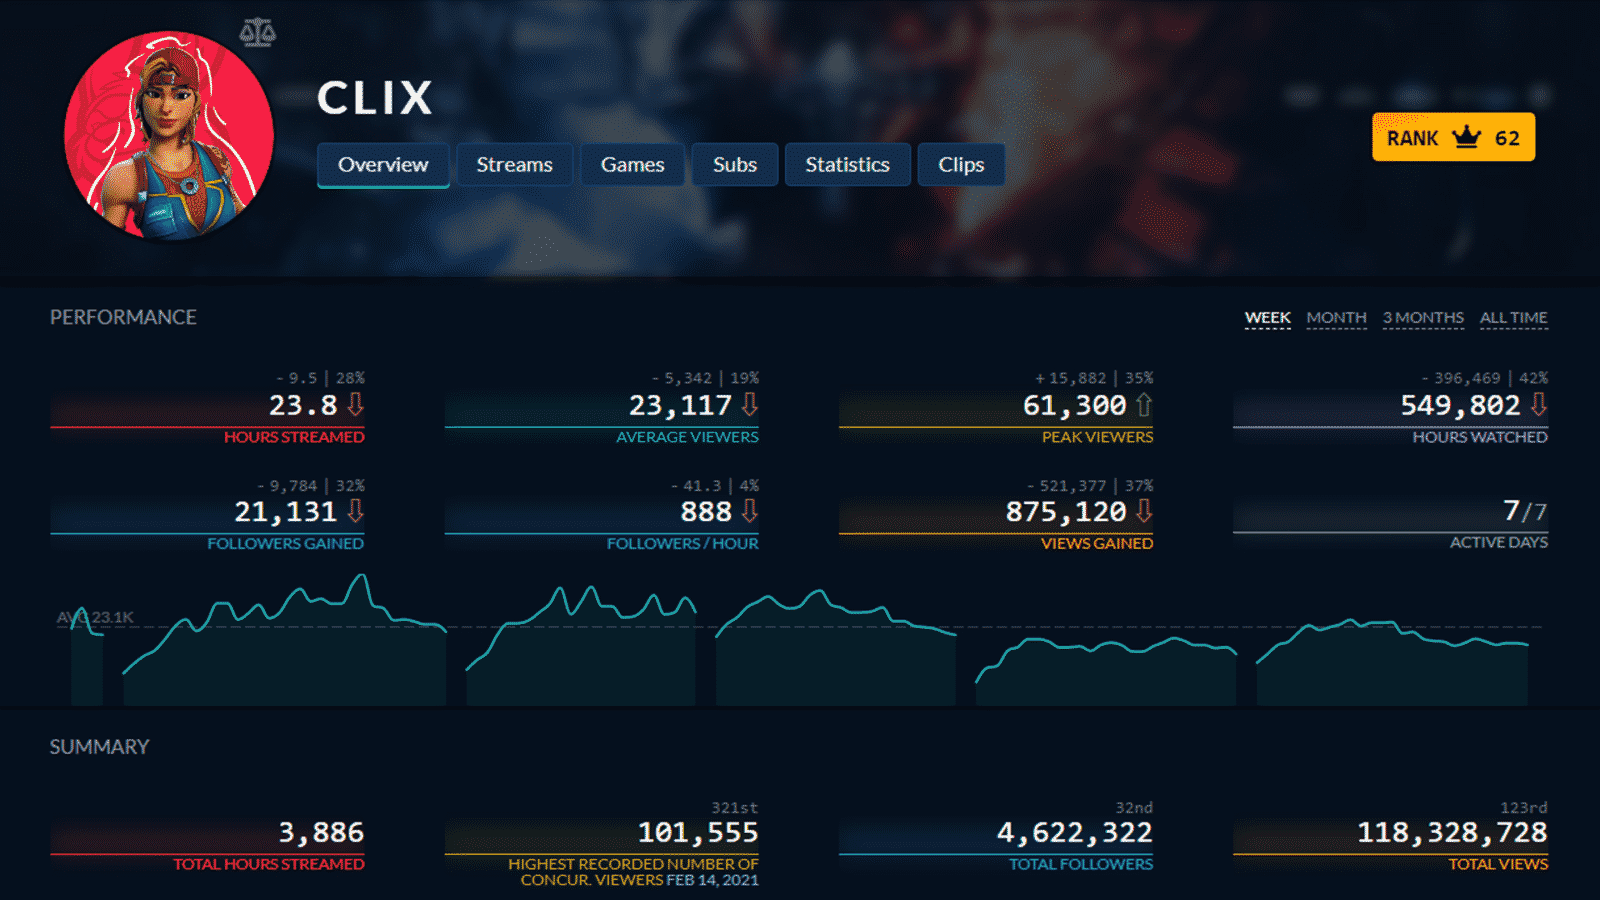 Clix Twitch Tracker Stats Summary